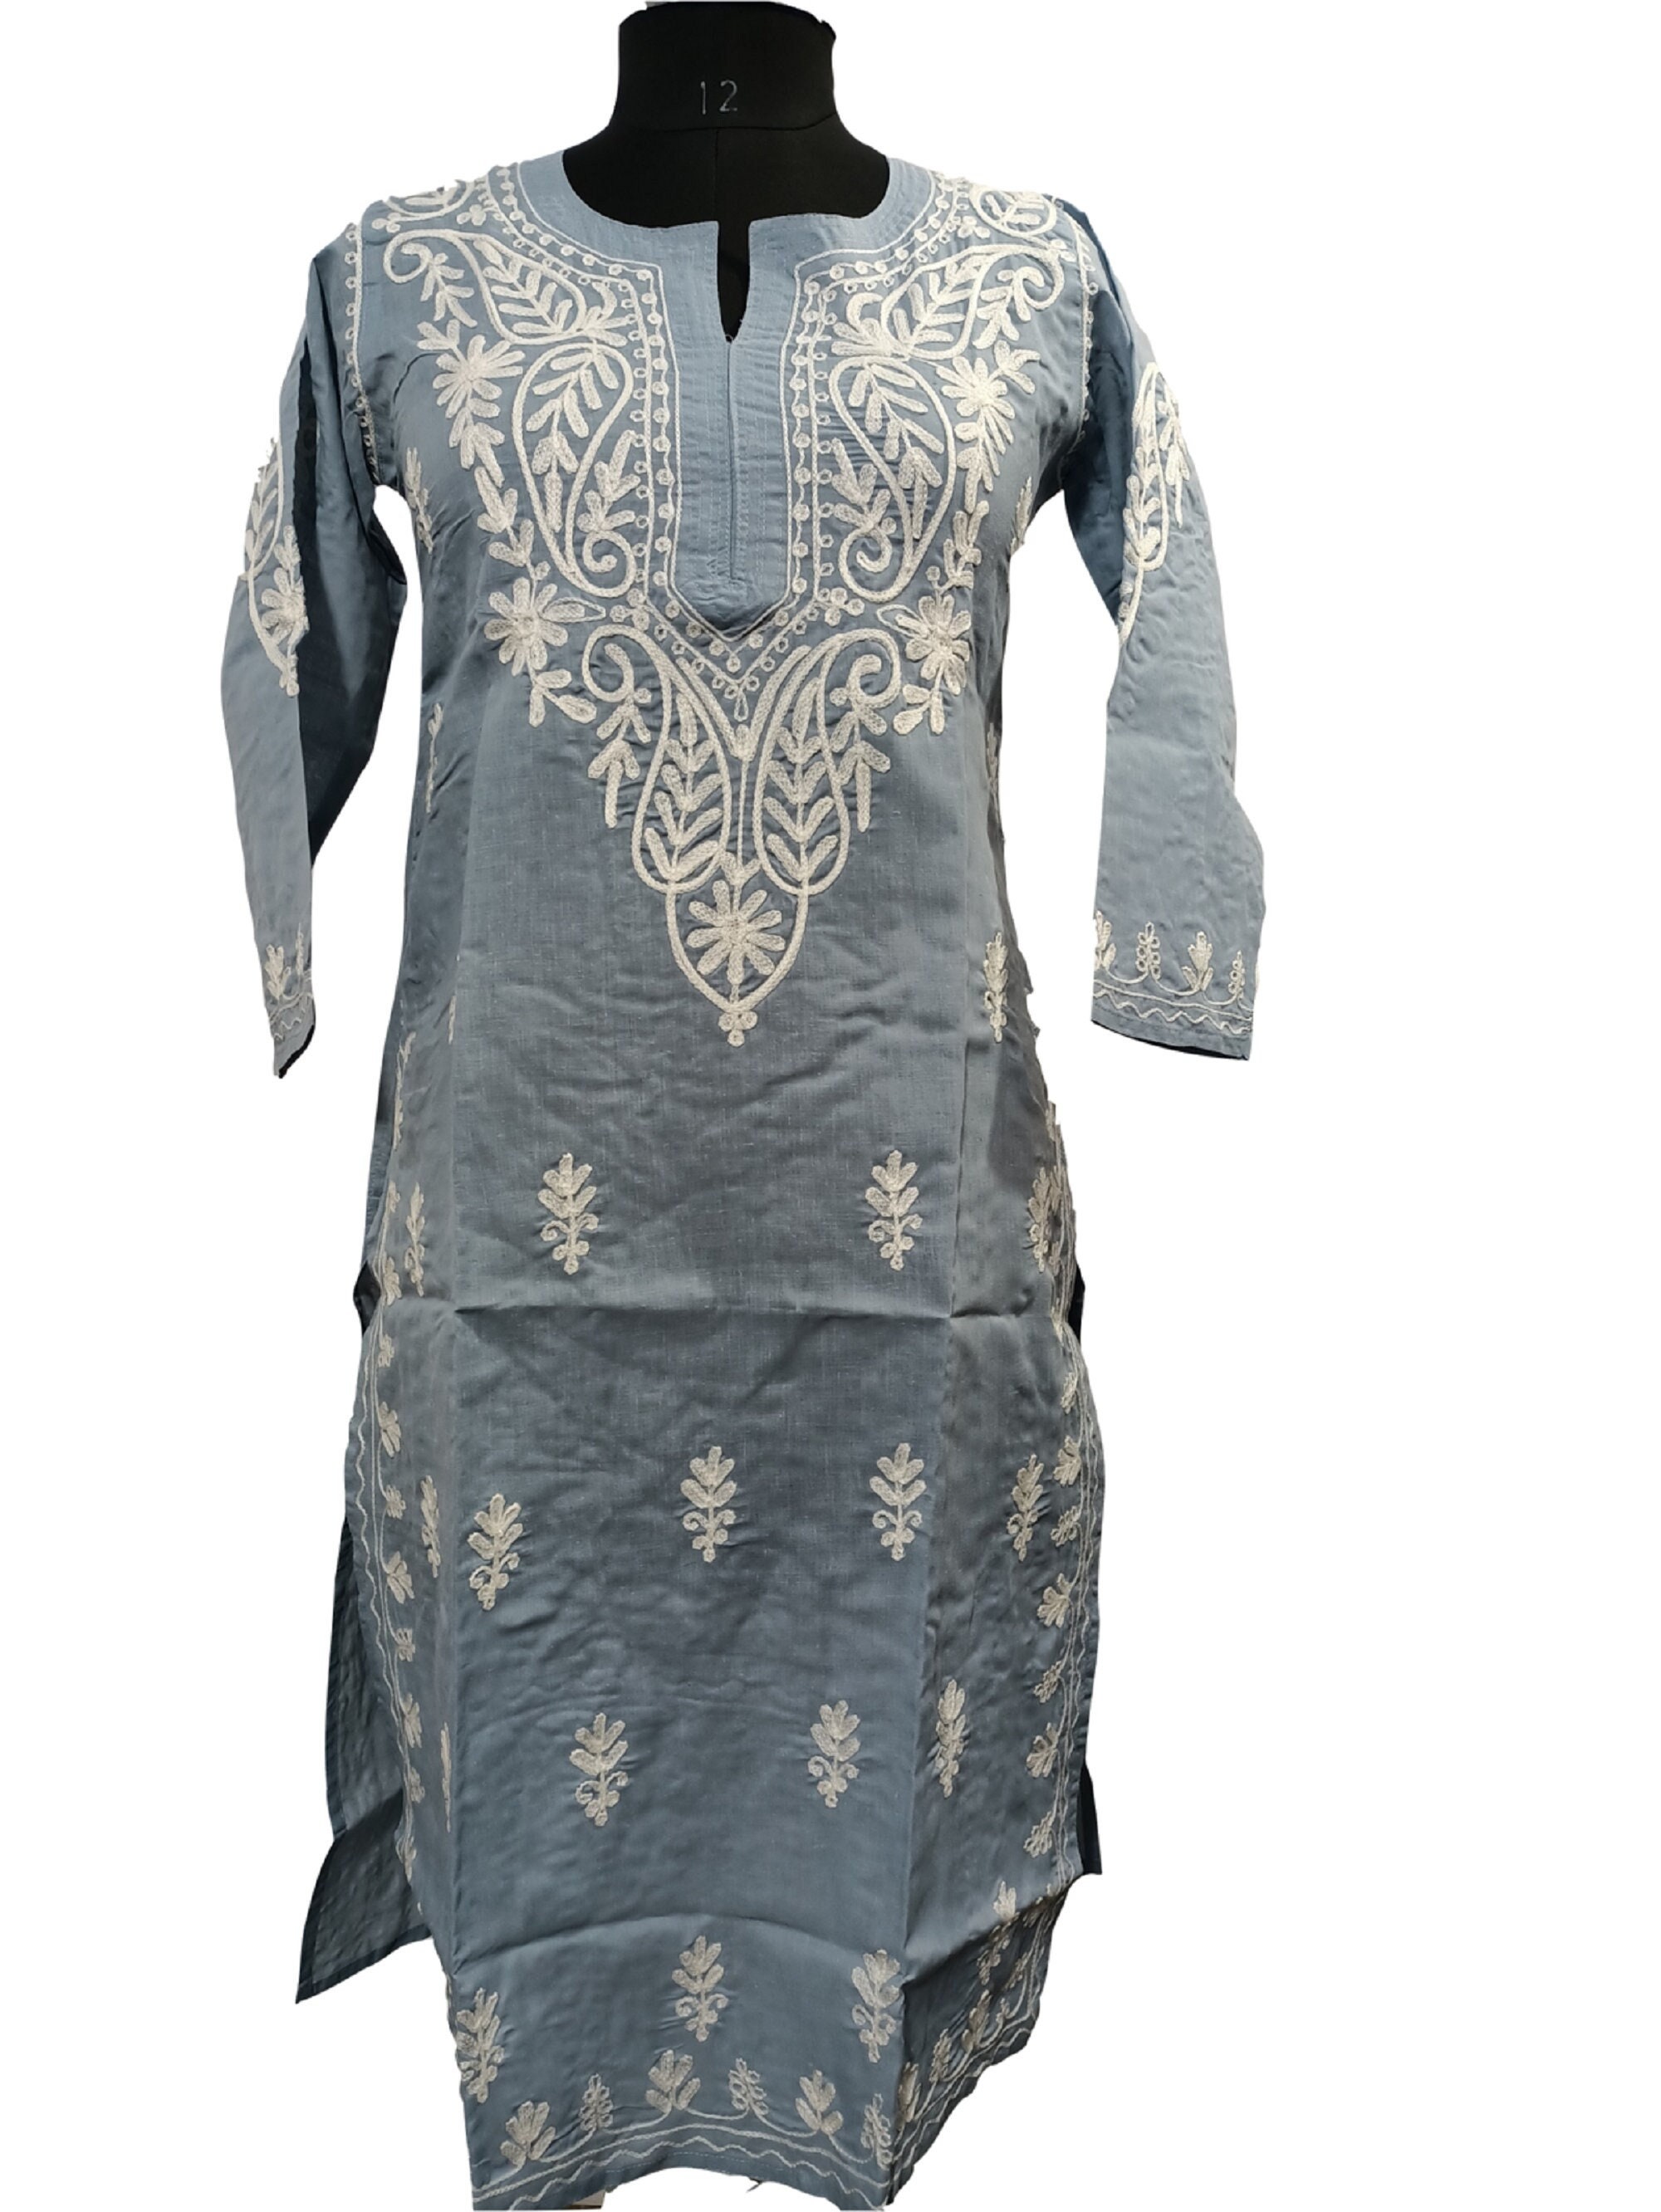 Buy SWAGG INDIA Women's Wear Lucknowi Chikankari Needlecraft Faux Georgette  Regular Wear Grey Kurti Kurta at Amazon.in